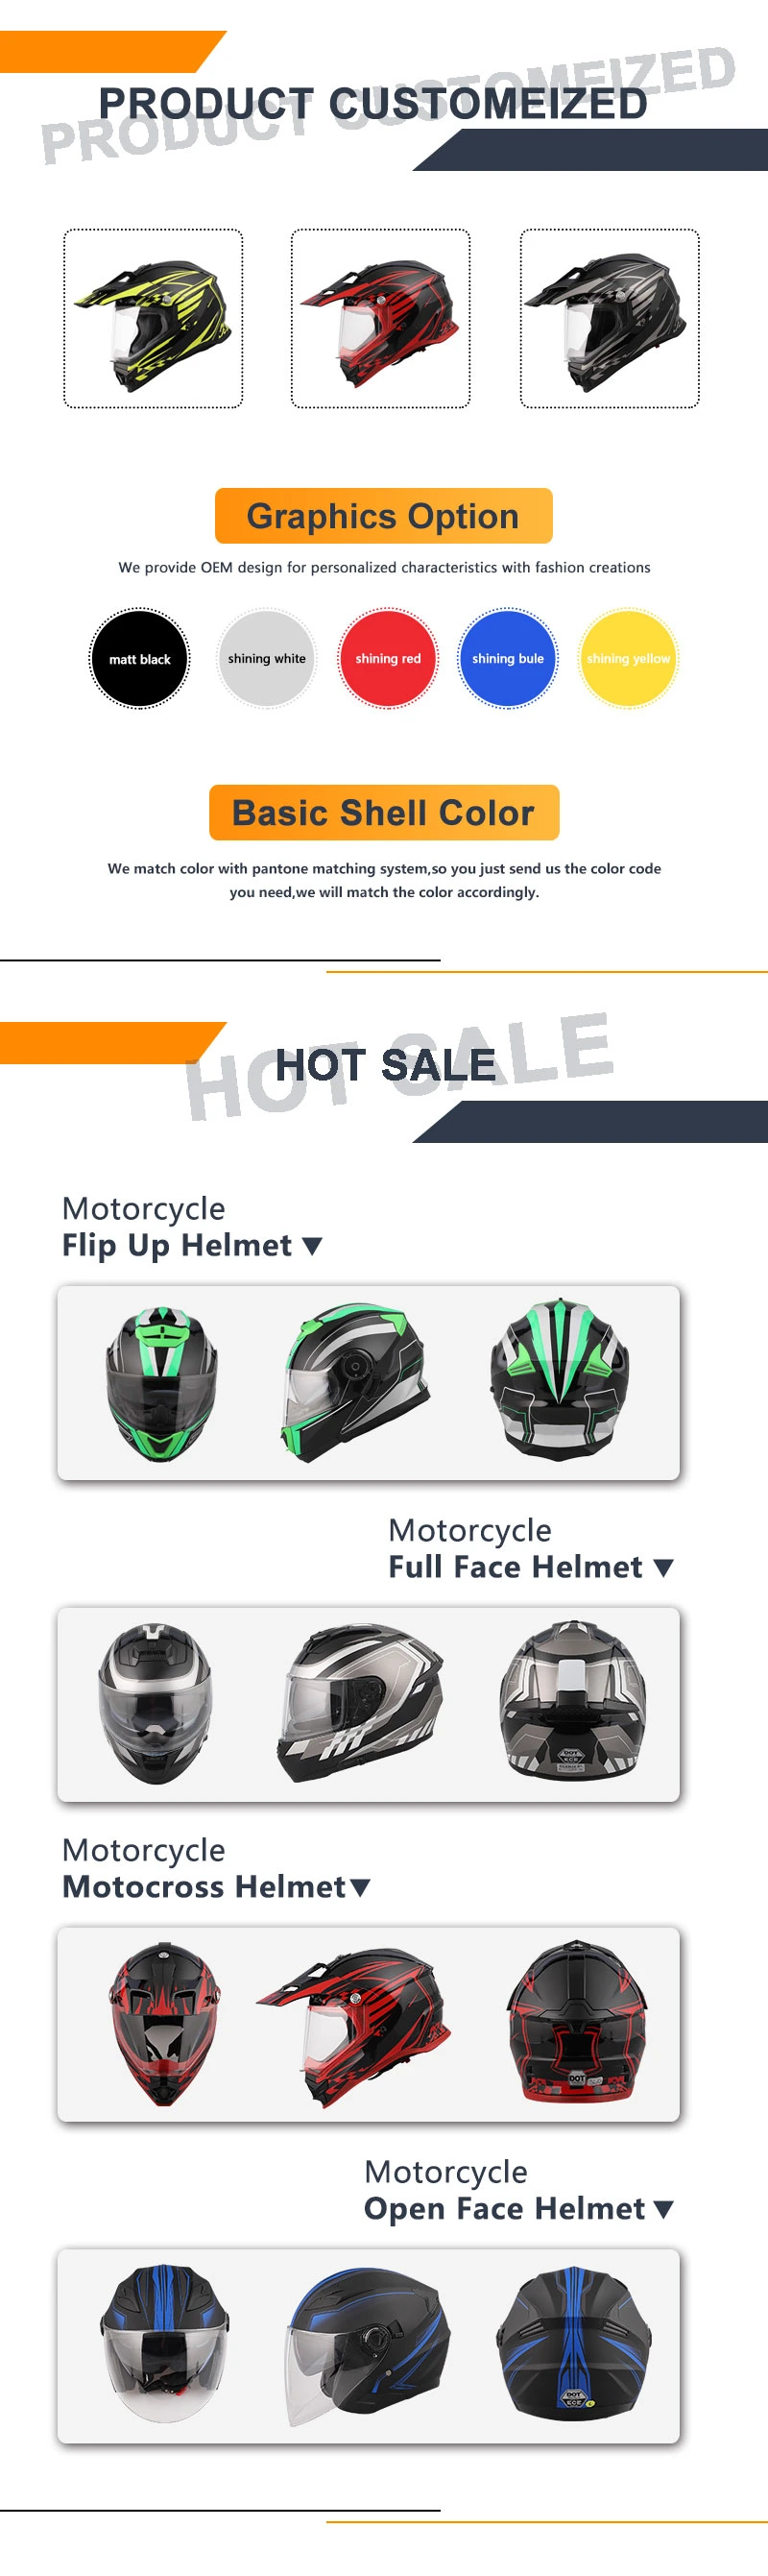 Custom Mx Helmet Motorcycle Helmet with Visor Youth Motocross Helmet